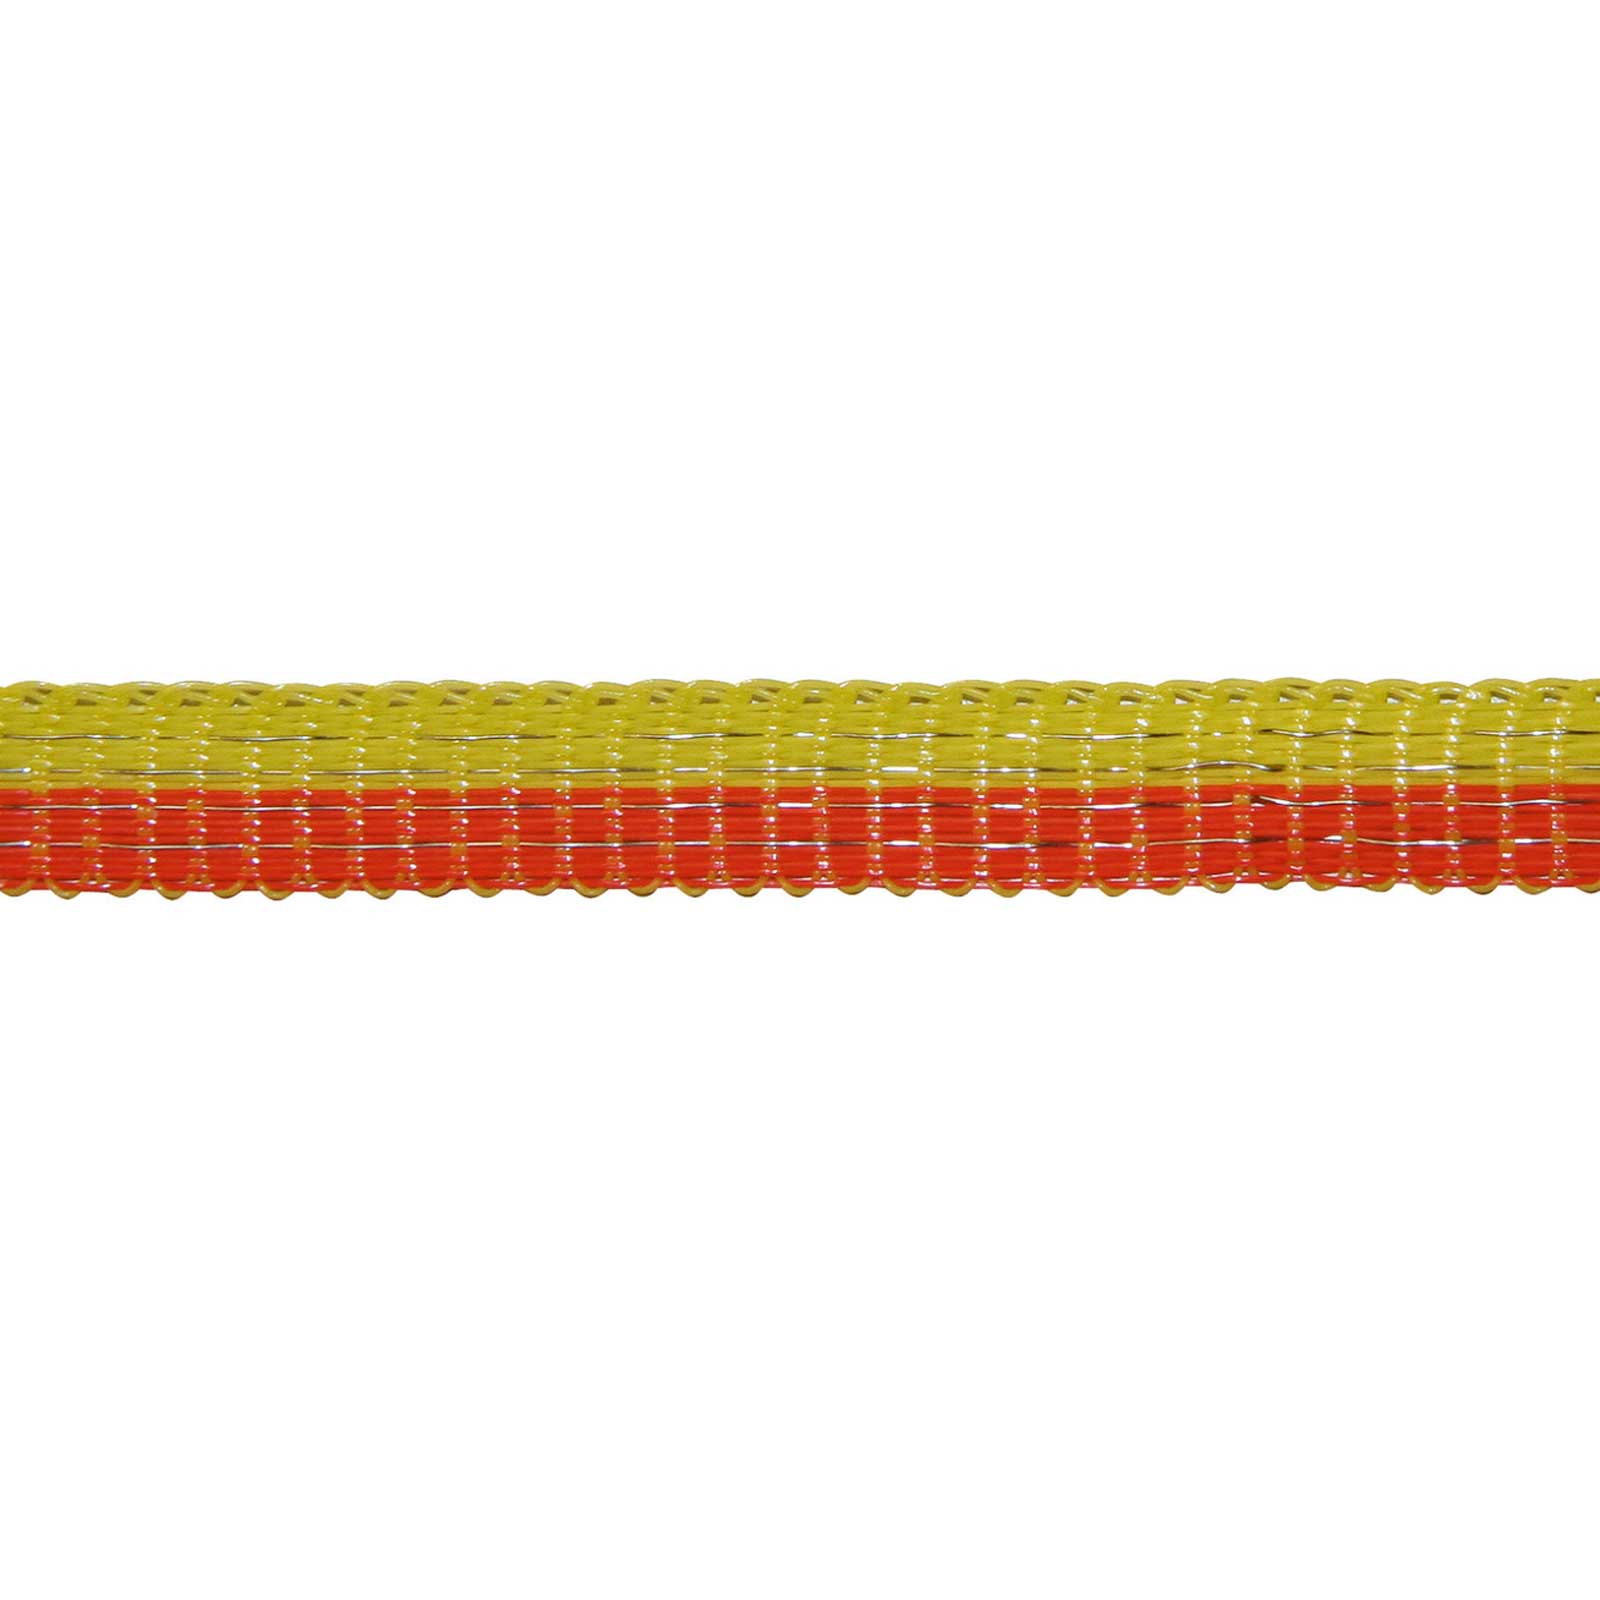 Ako Pasture Fence Tape EconomyLine 400m, 10mm, 4x0.16 Niro, yellow-orange